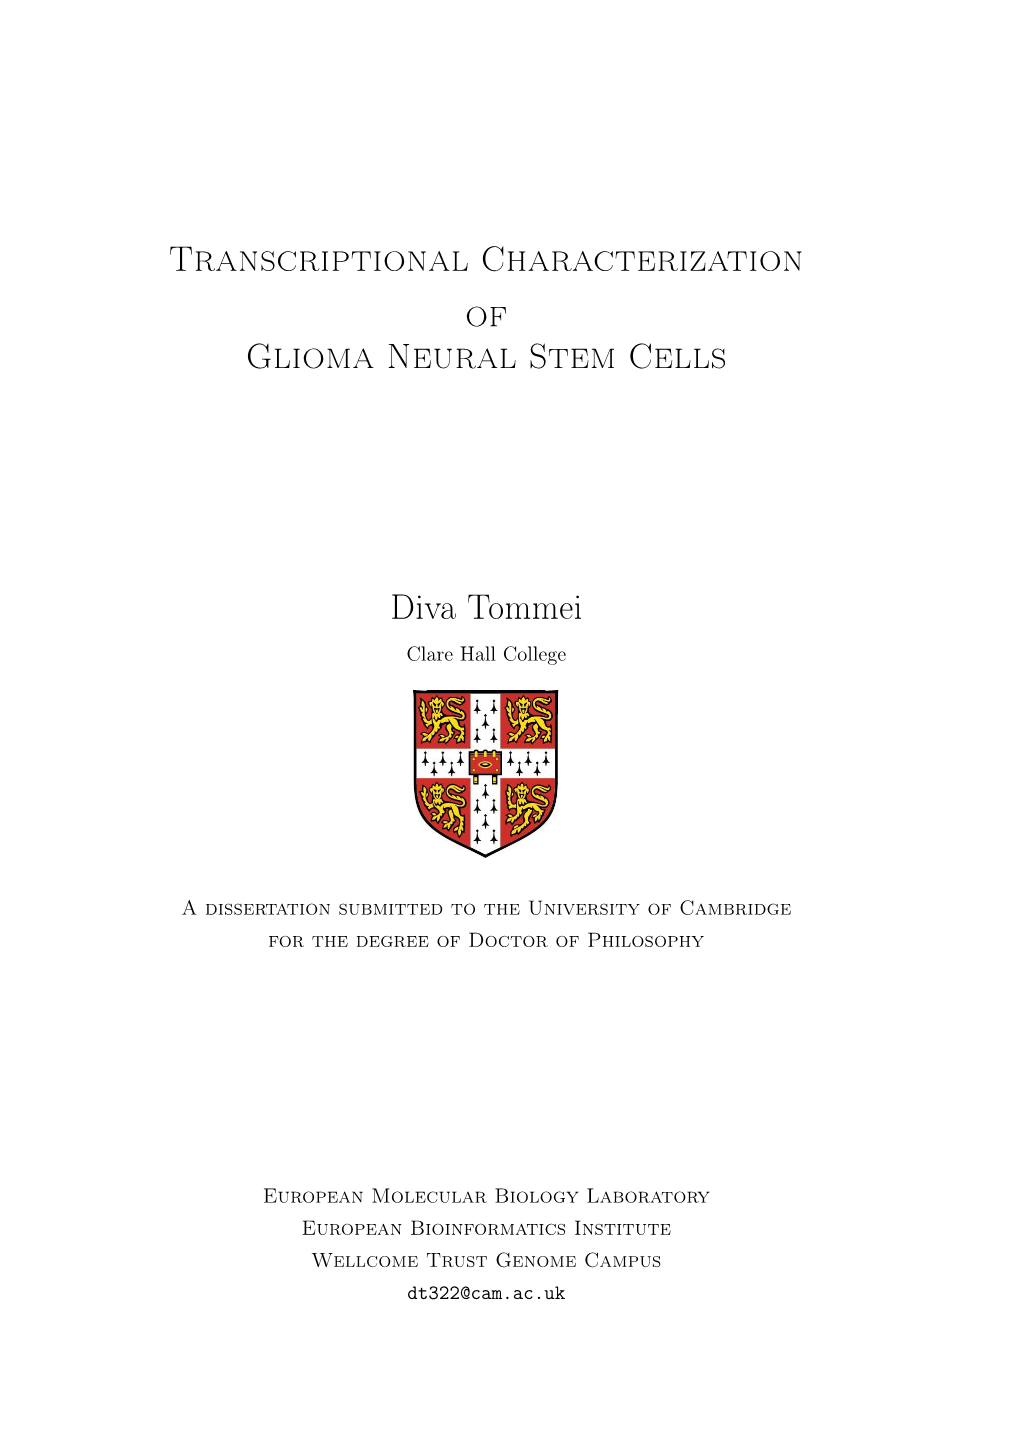 Transcriptional Characterization of Glioma Neural Stem Cells